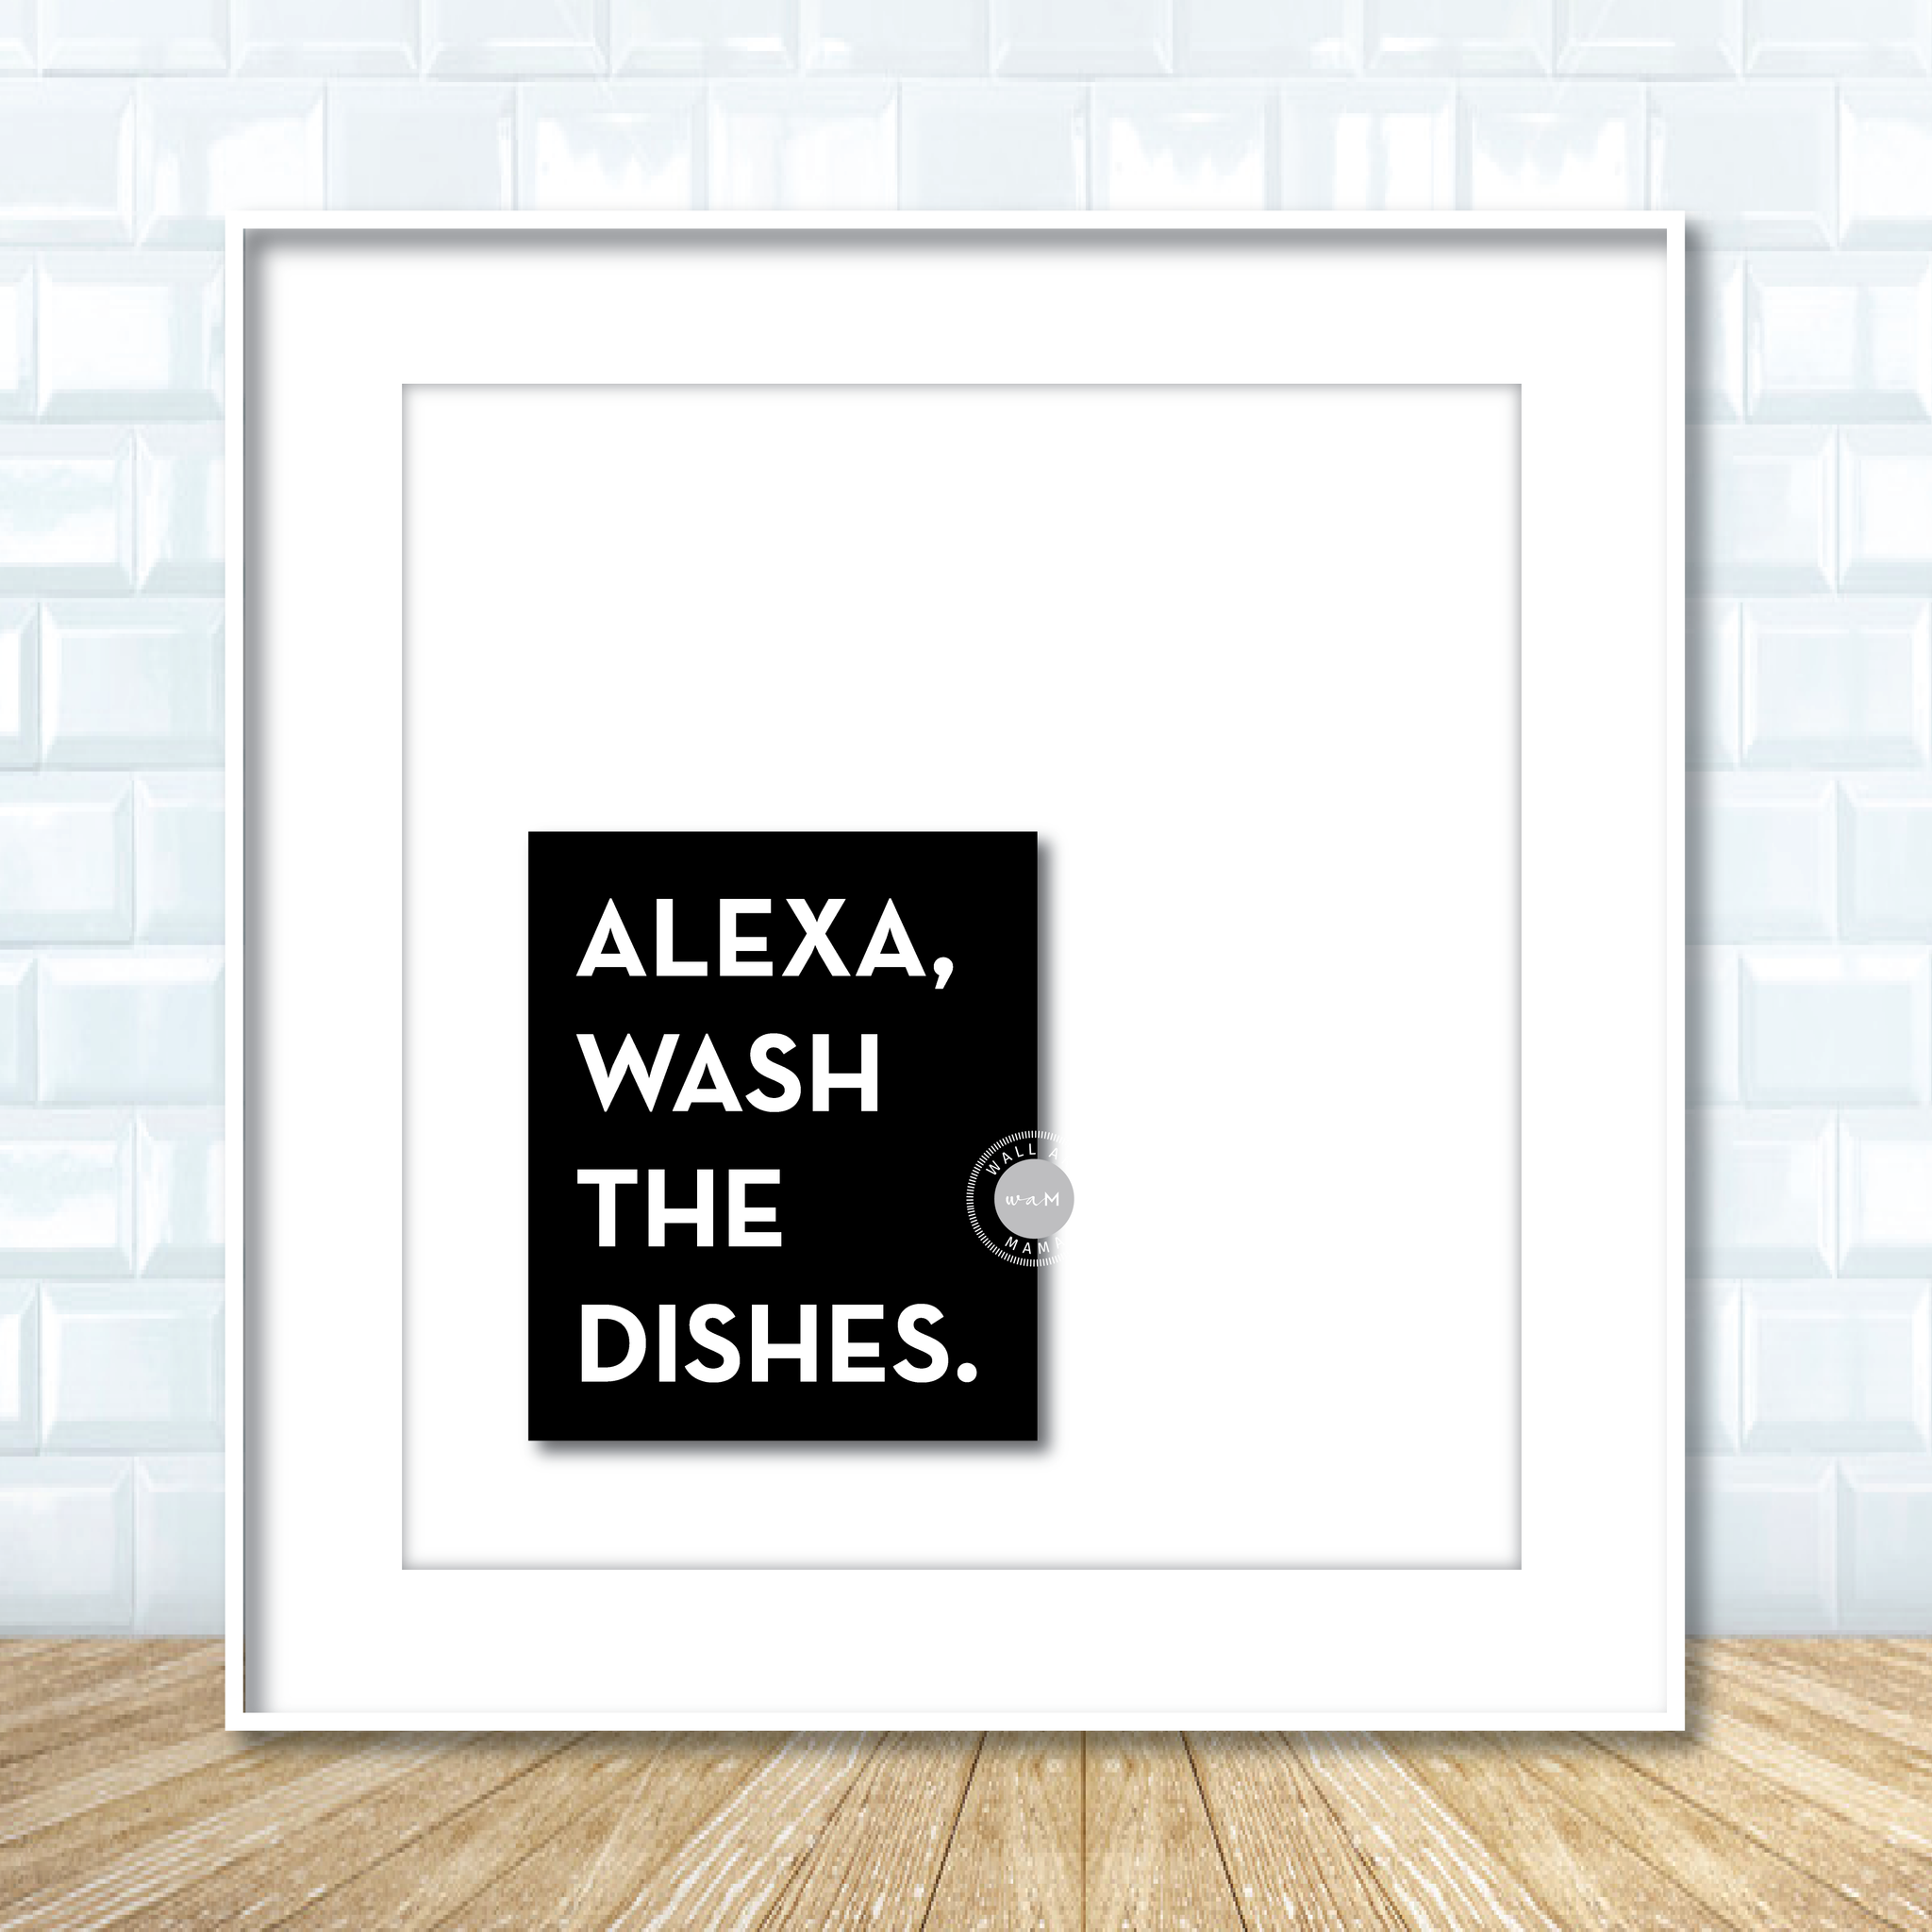 ALEXA, WASH THE DISHES